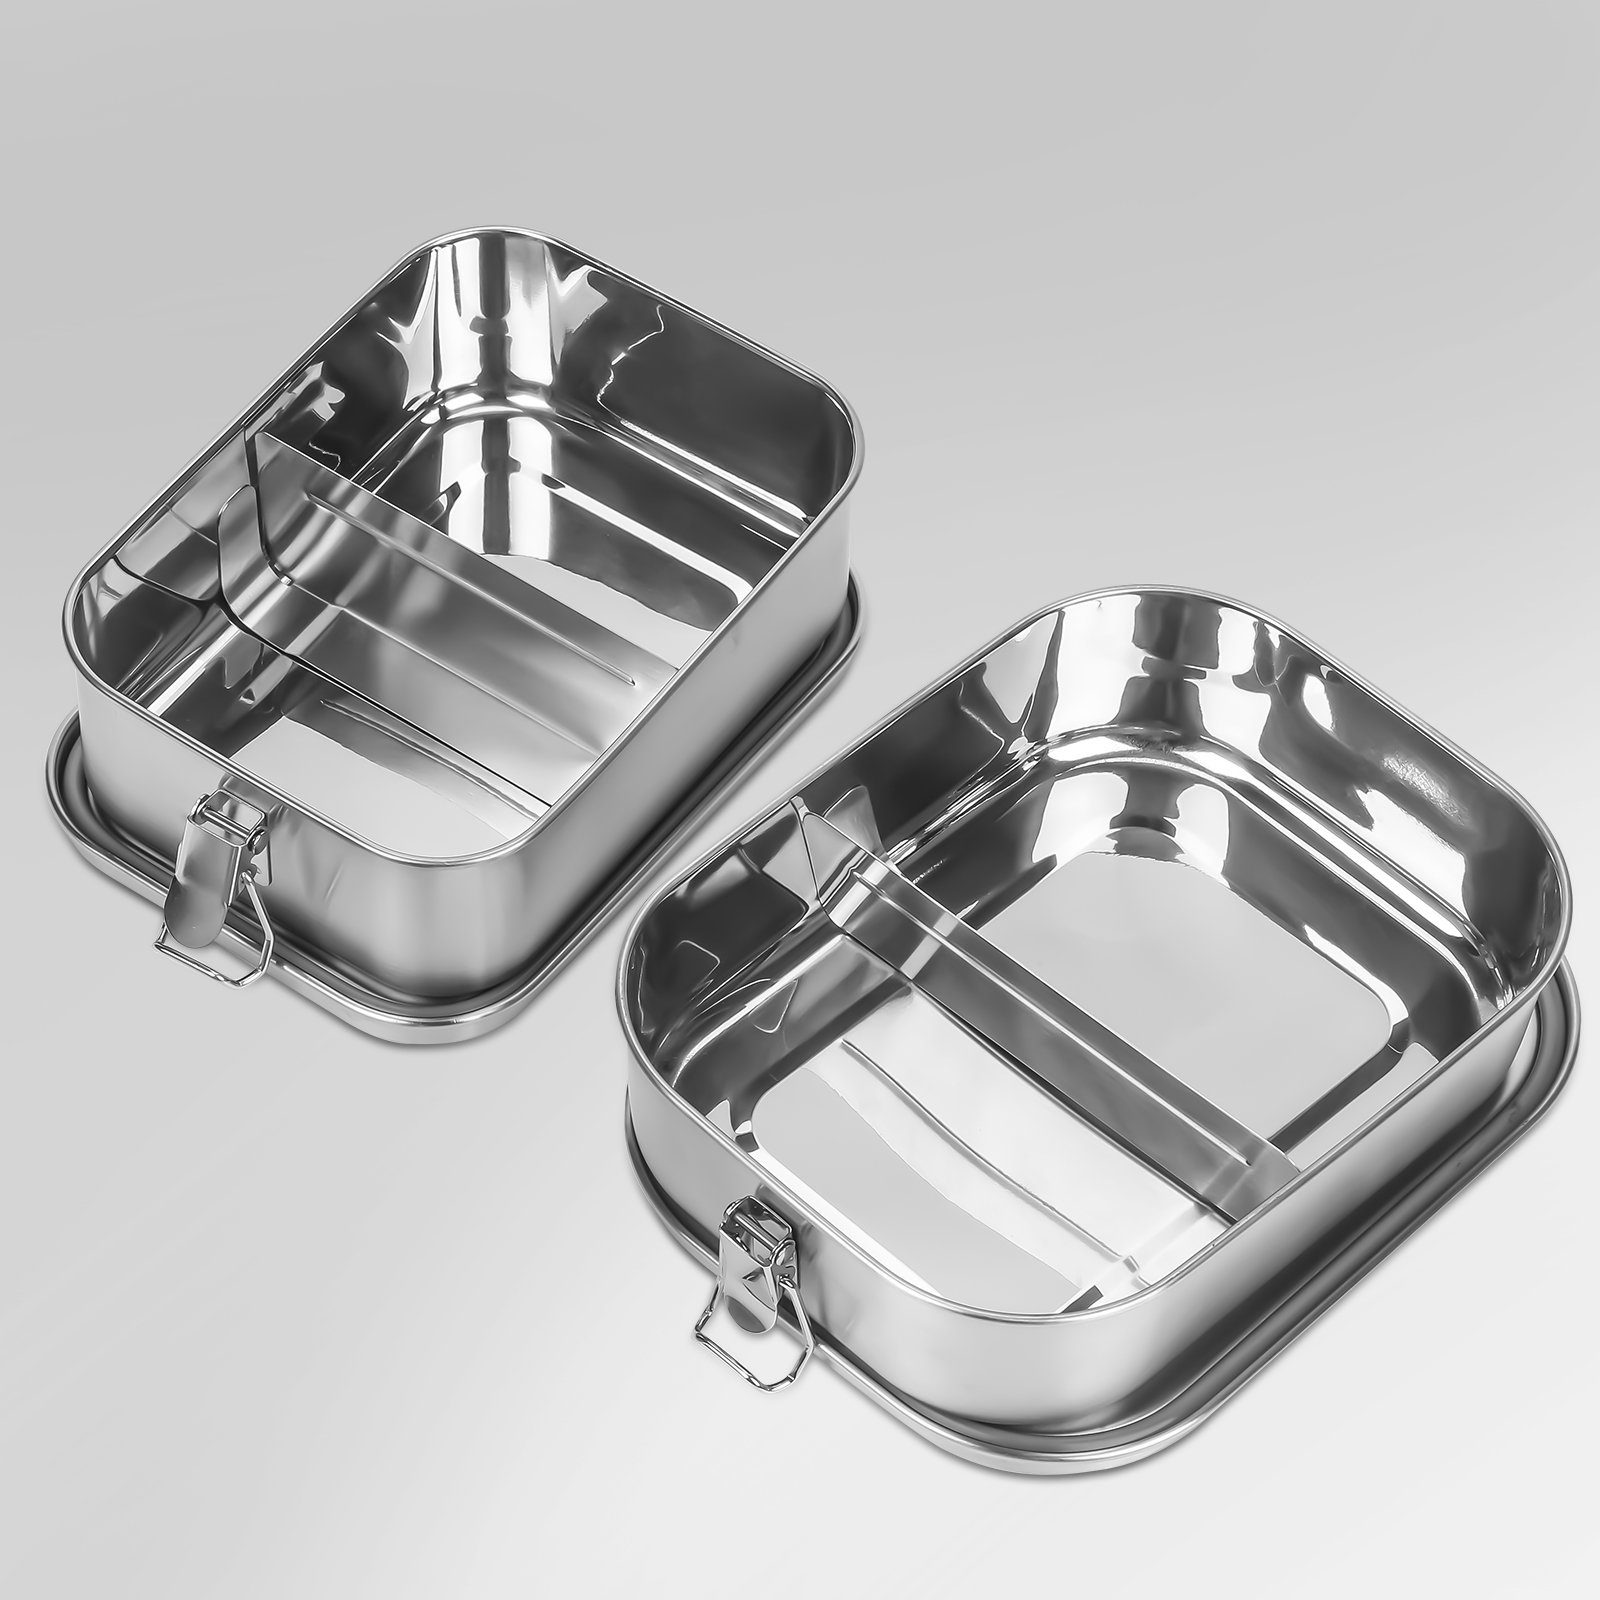 Clanmacy Lunchbox 800-1400ml Brotdose Metall Silber BPA Fächern Lunchbox (abnehmbar) Edelstahl, 1200+1400ml Brotdose Thermobehälter frei